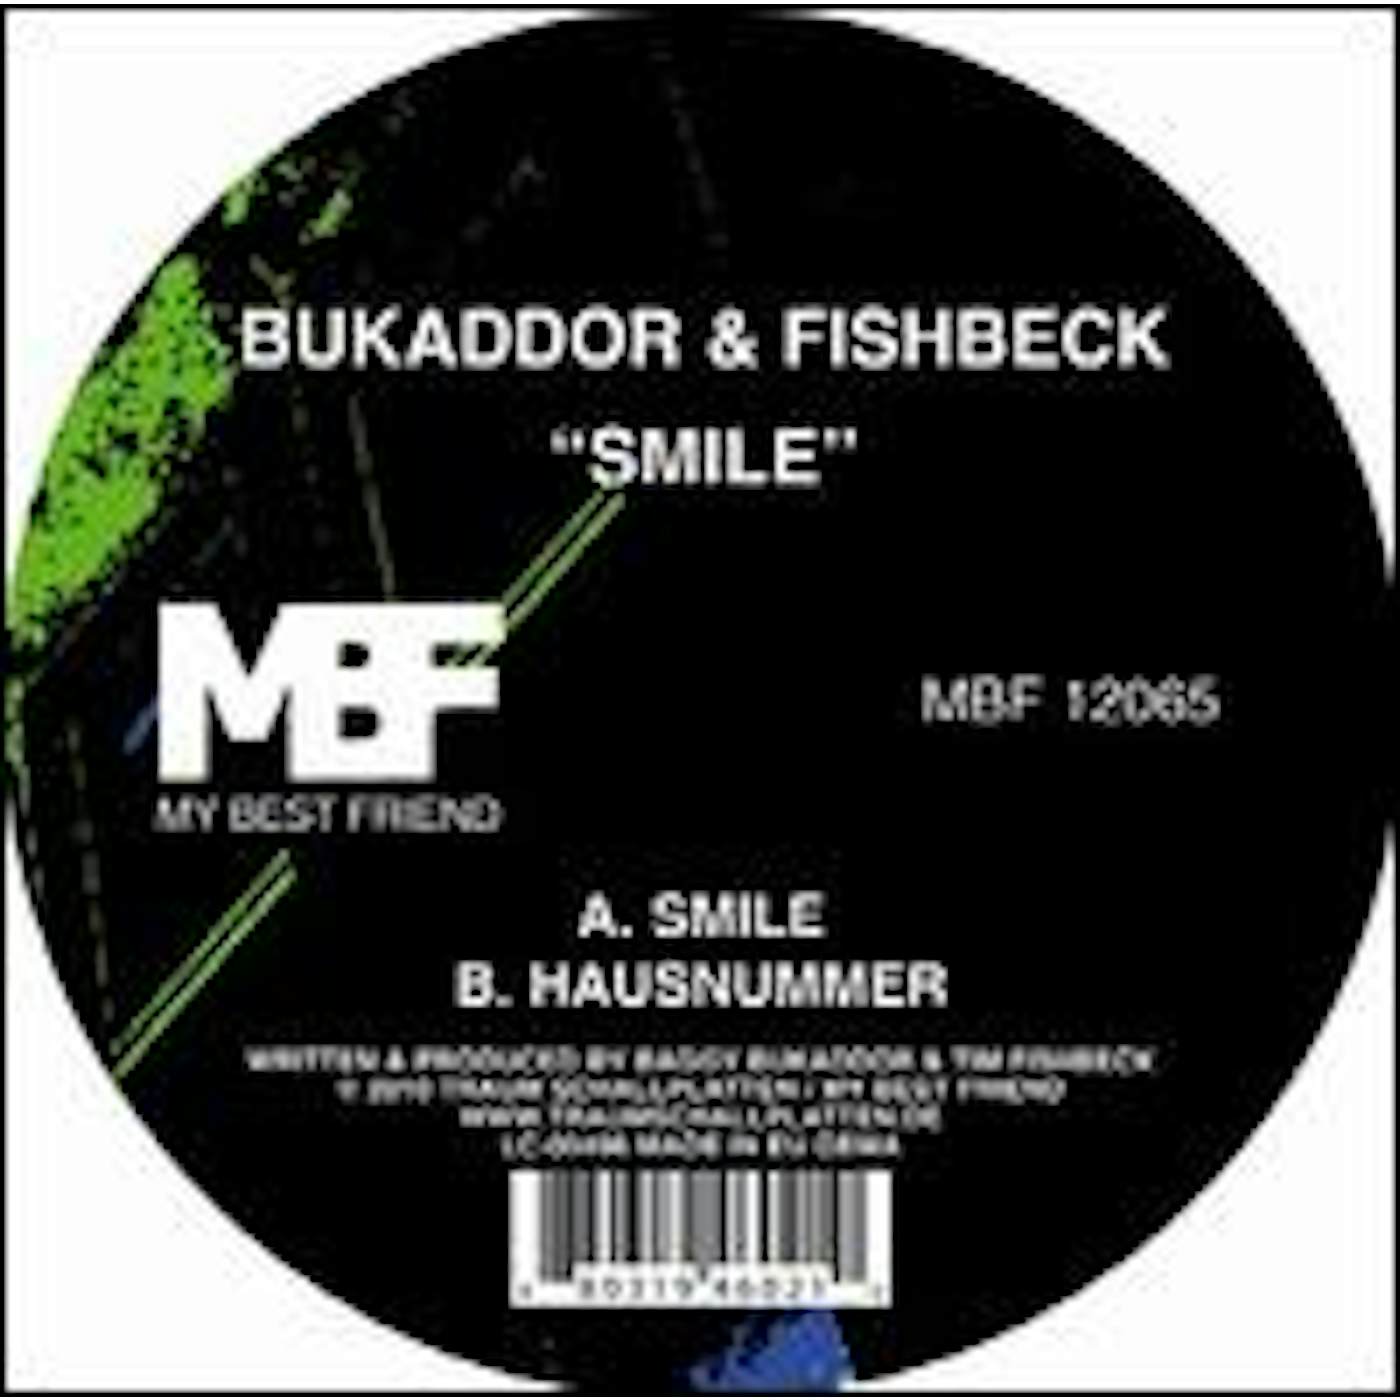 Bukaddor & Fishbeck Smile Vinyl Record